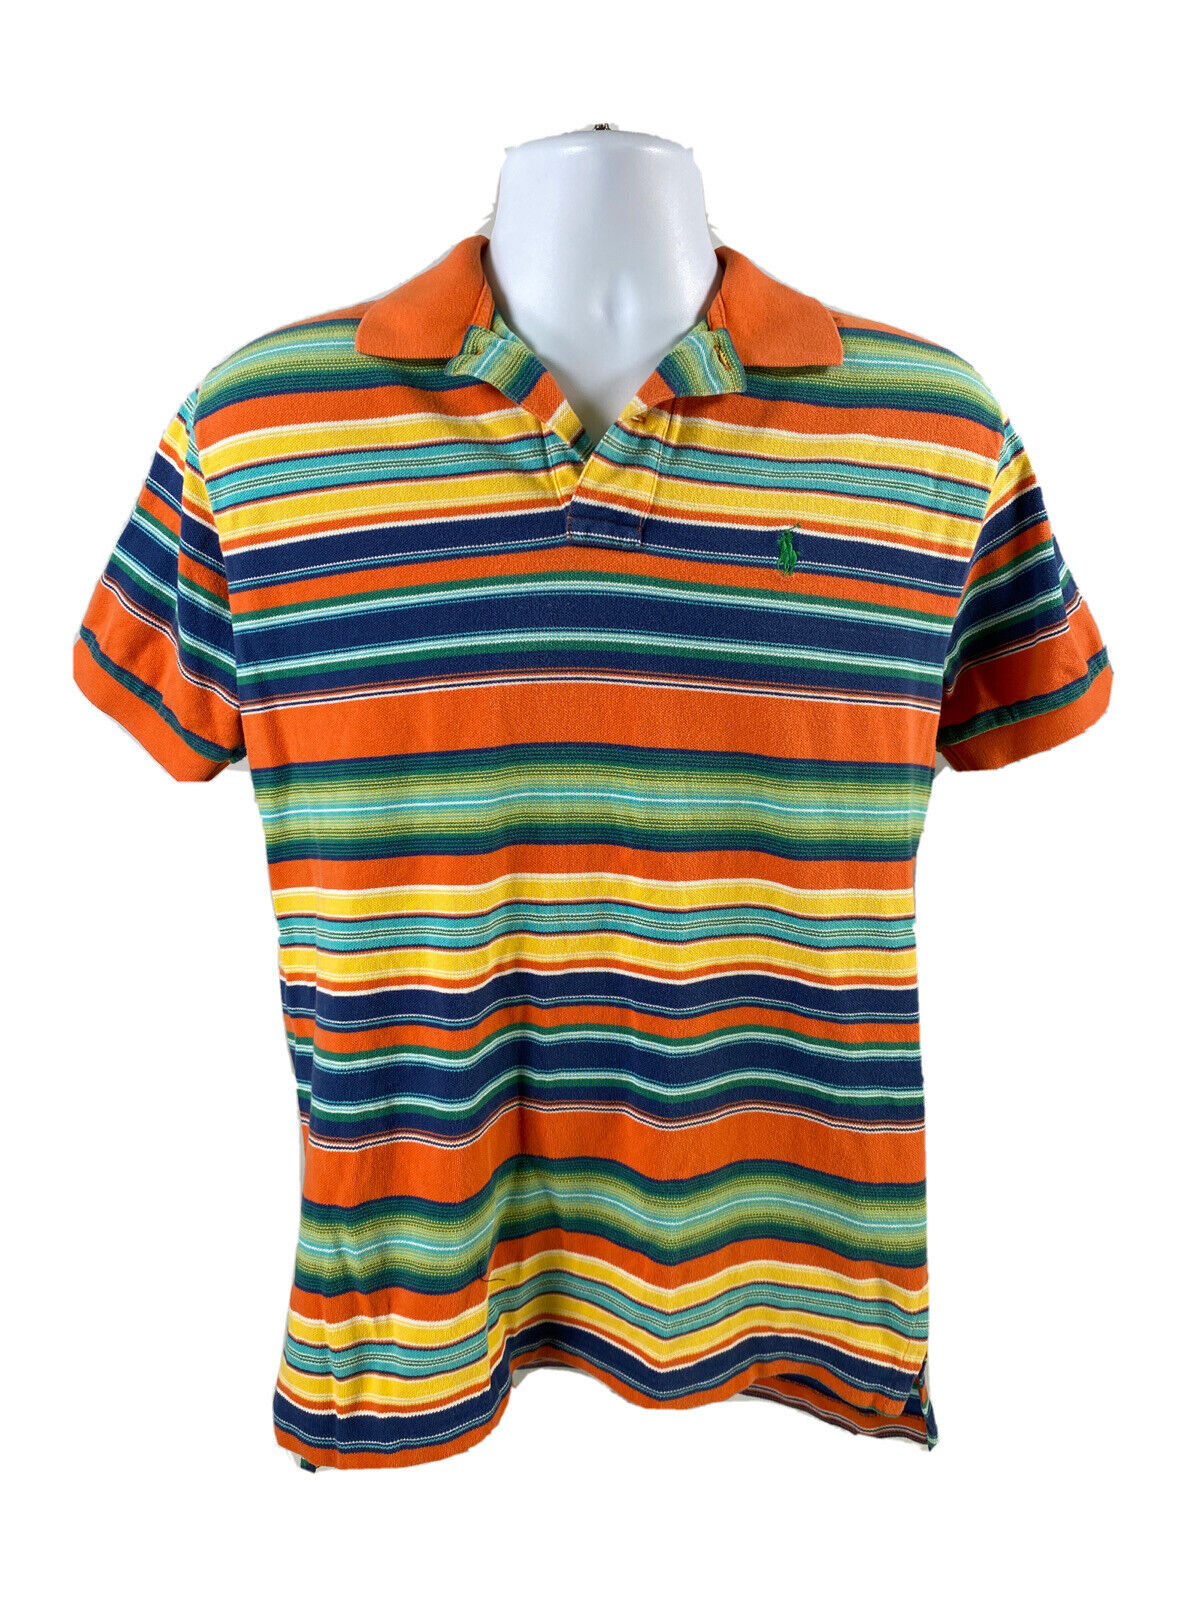 Polo by Ralph Lauren Men's Orange Striped Short Sleeve Polo - M